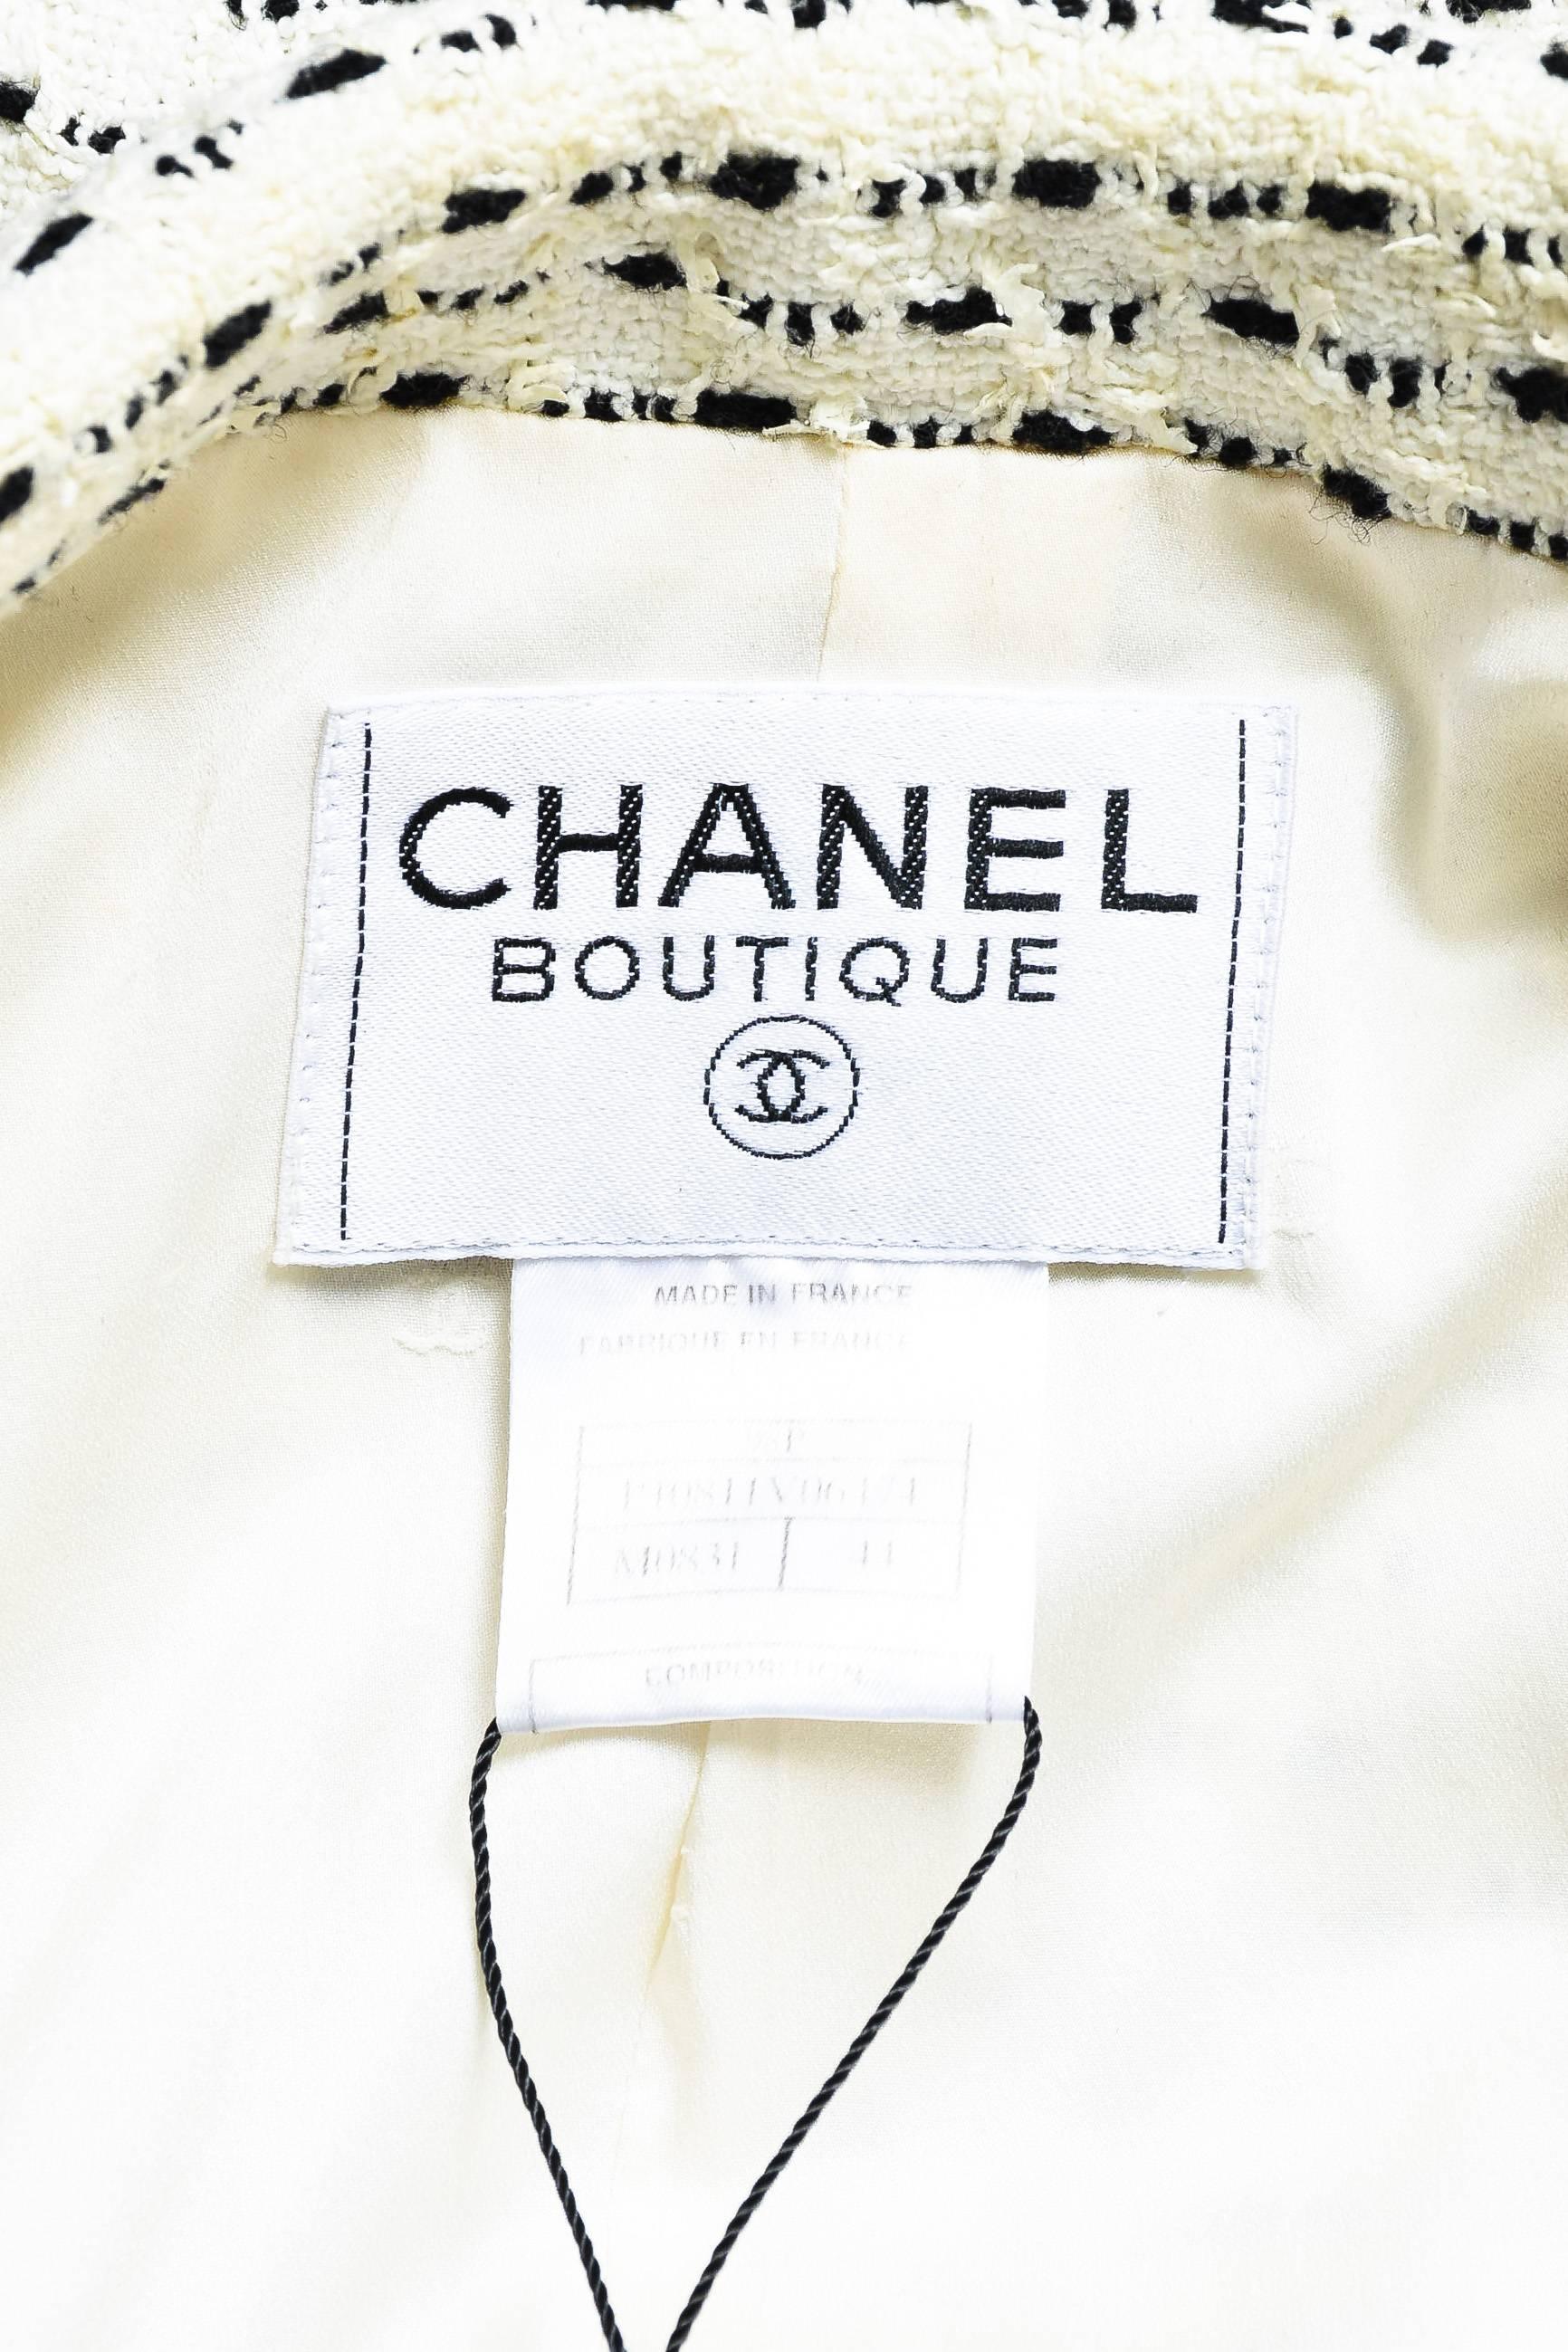 Women's Vintage Chanel Boutique White & Black Textured Knit Buttoned Jacket SZ 44 For Sale